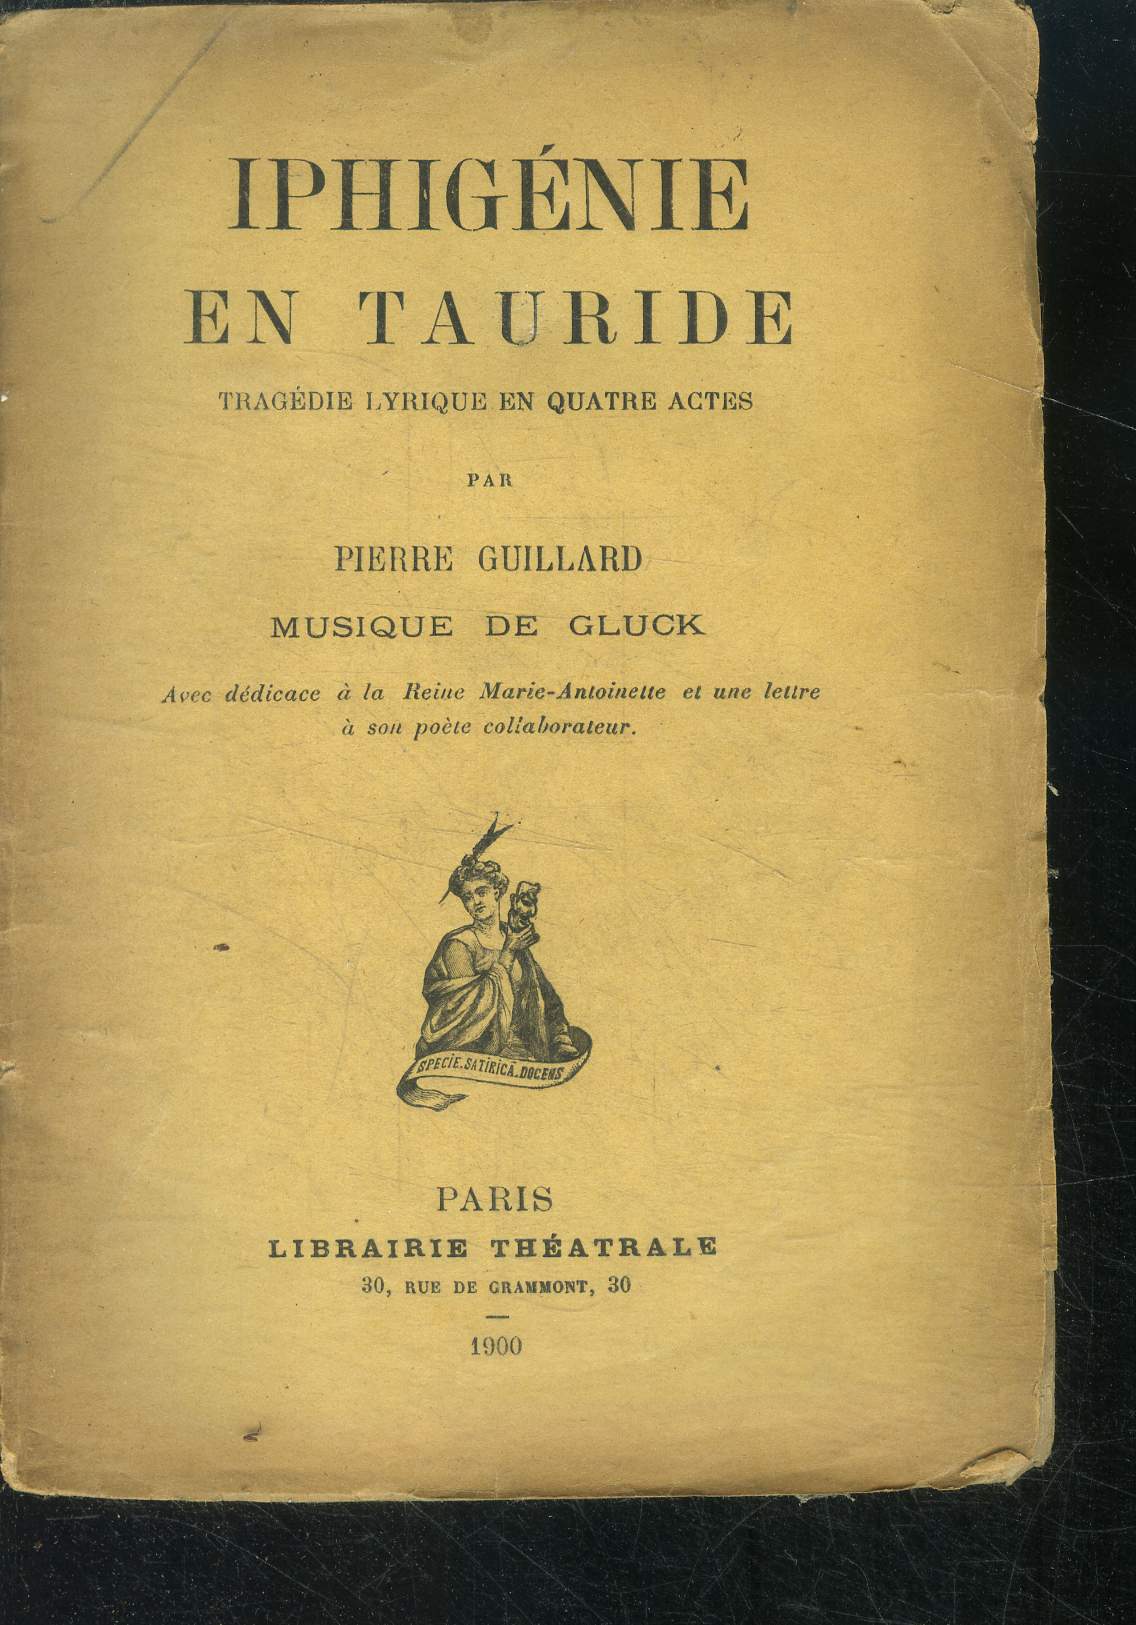 Iphigenie en tauride - tragedie lyrique en 4 actes - musique de gluck